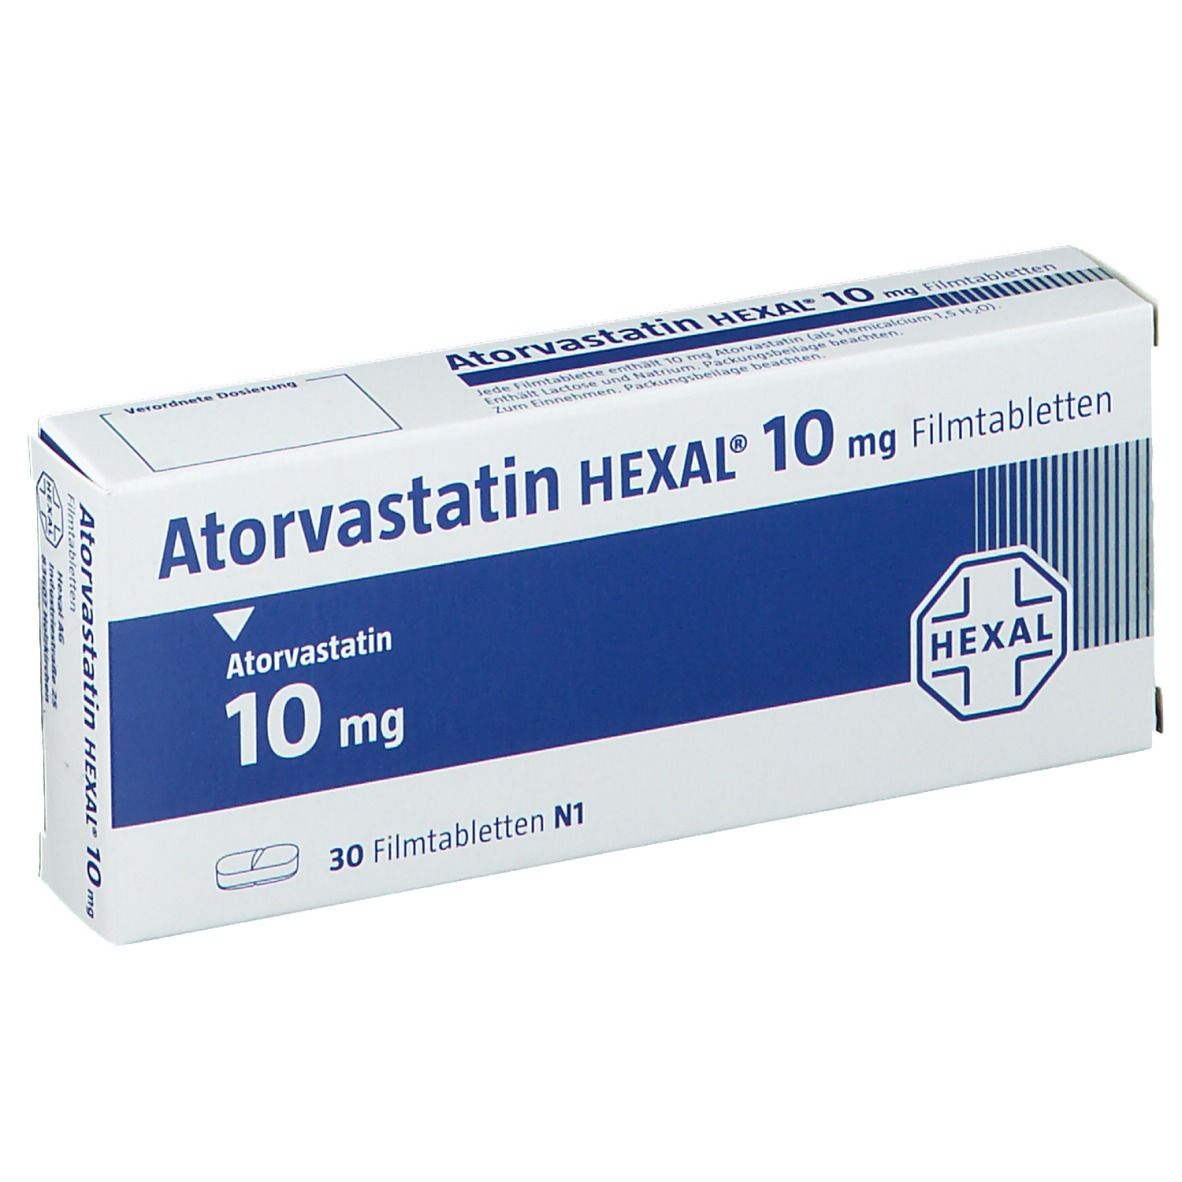 Atorvastatin HEXAL® 10 mg